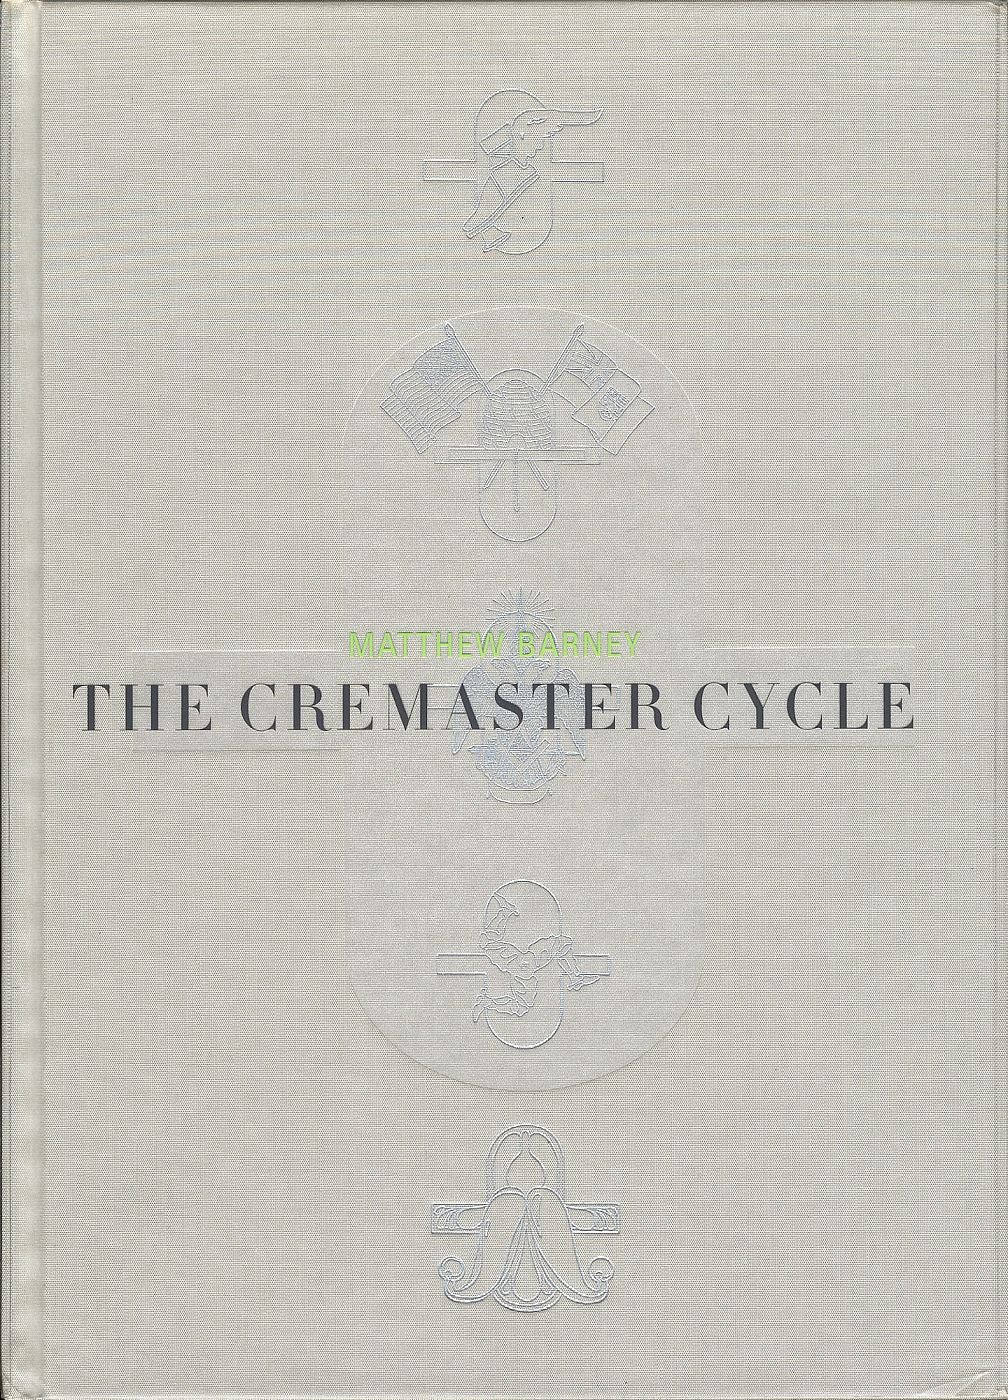 Matthew Barney: The Cremaster Cycle (Hardcover Edition)